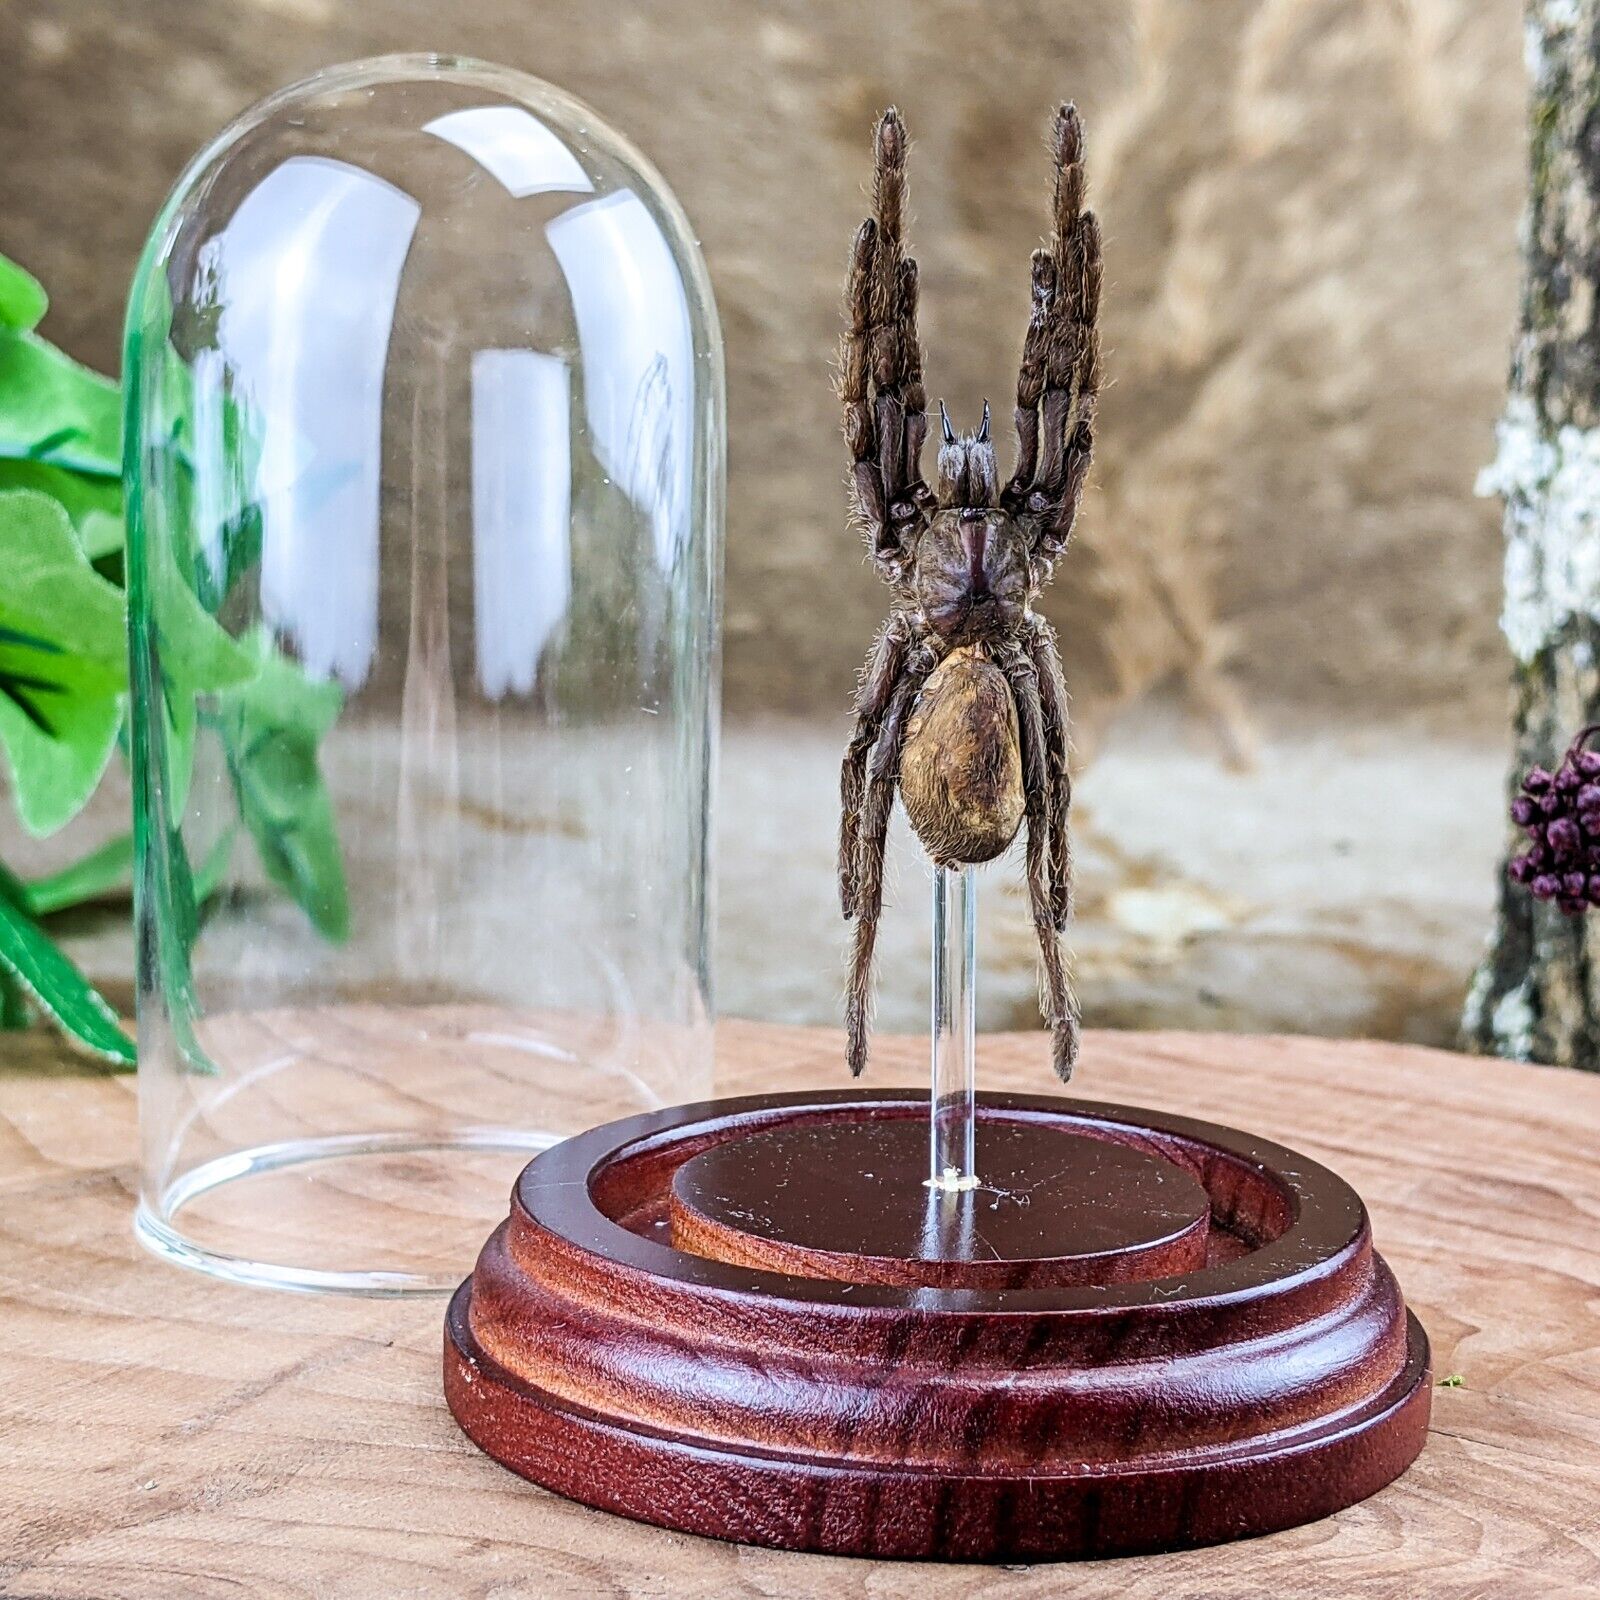 V1c Tarantula Spider Glass Dome Display Specimen Arachnid Taxidermy Entomology